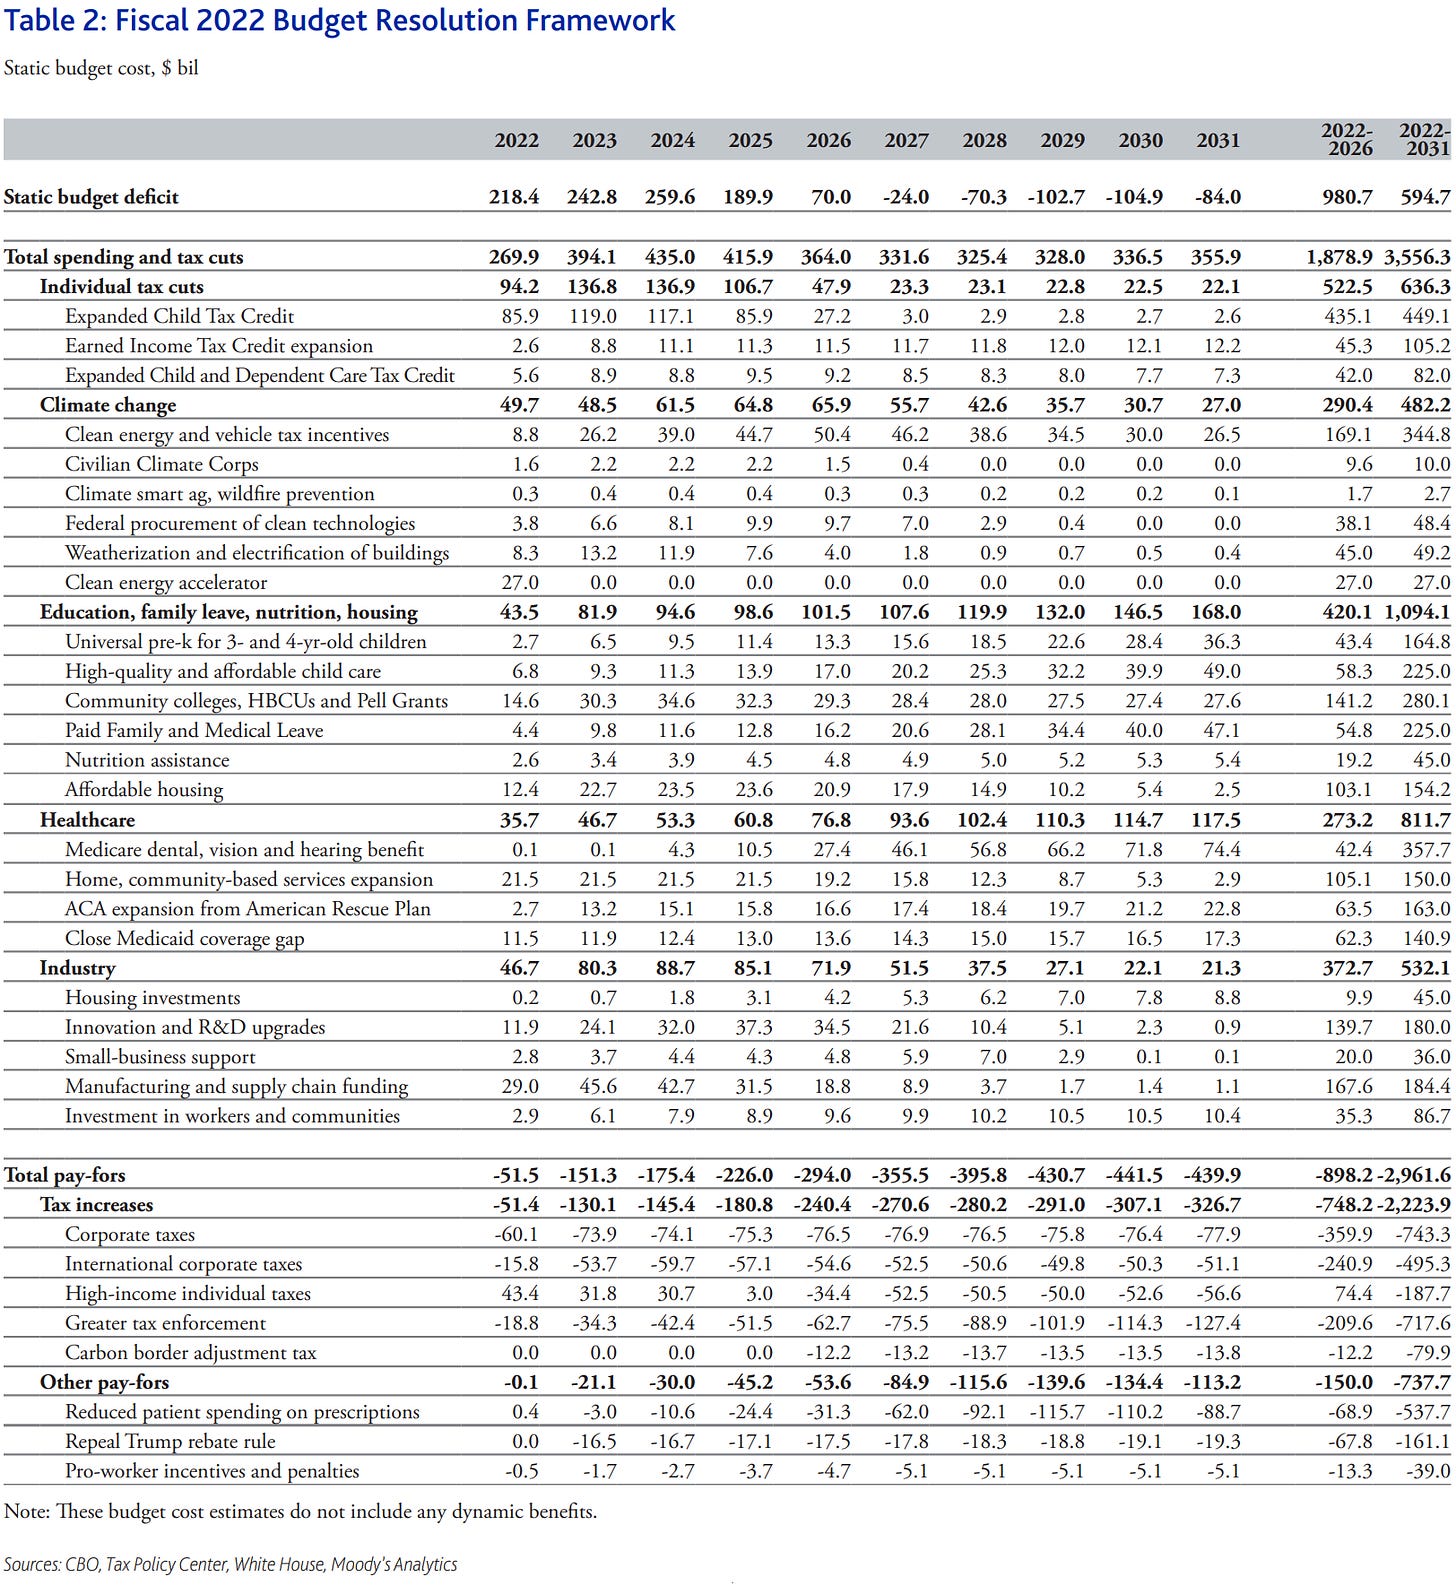 Moody's Analytics budget resolution framework table of estimates